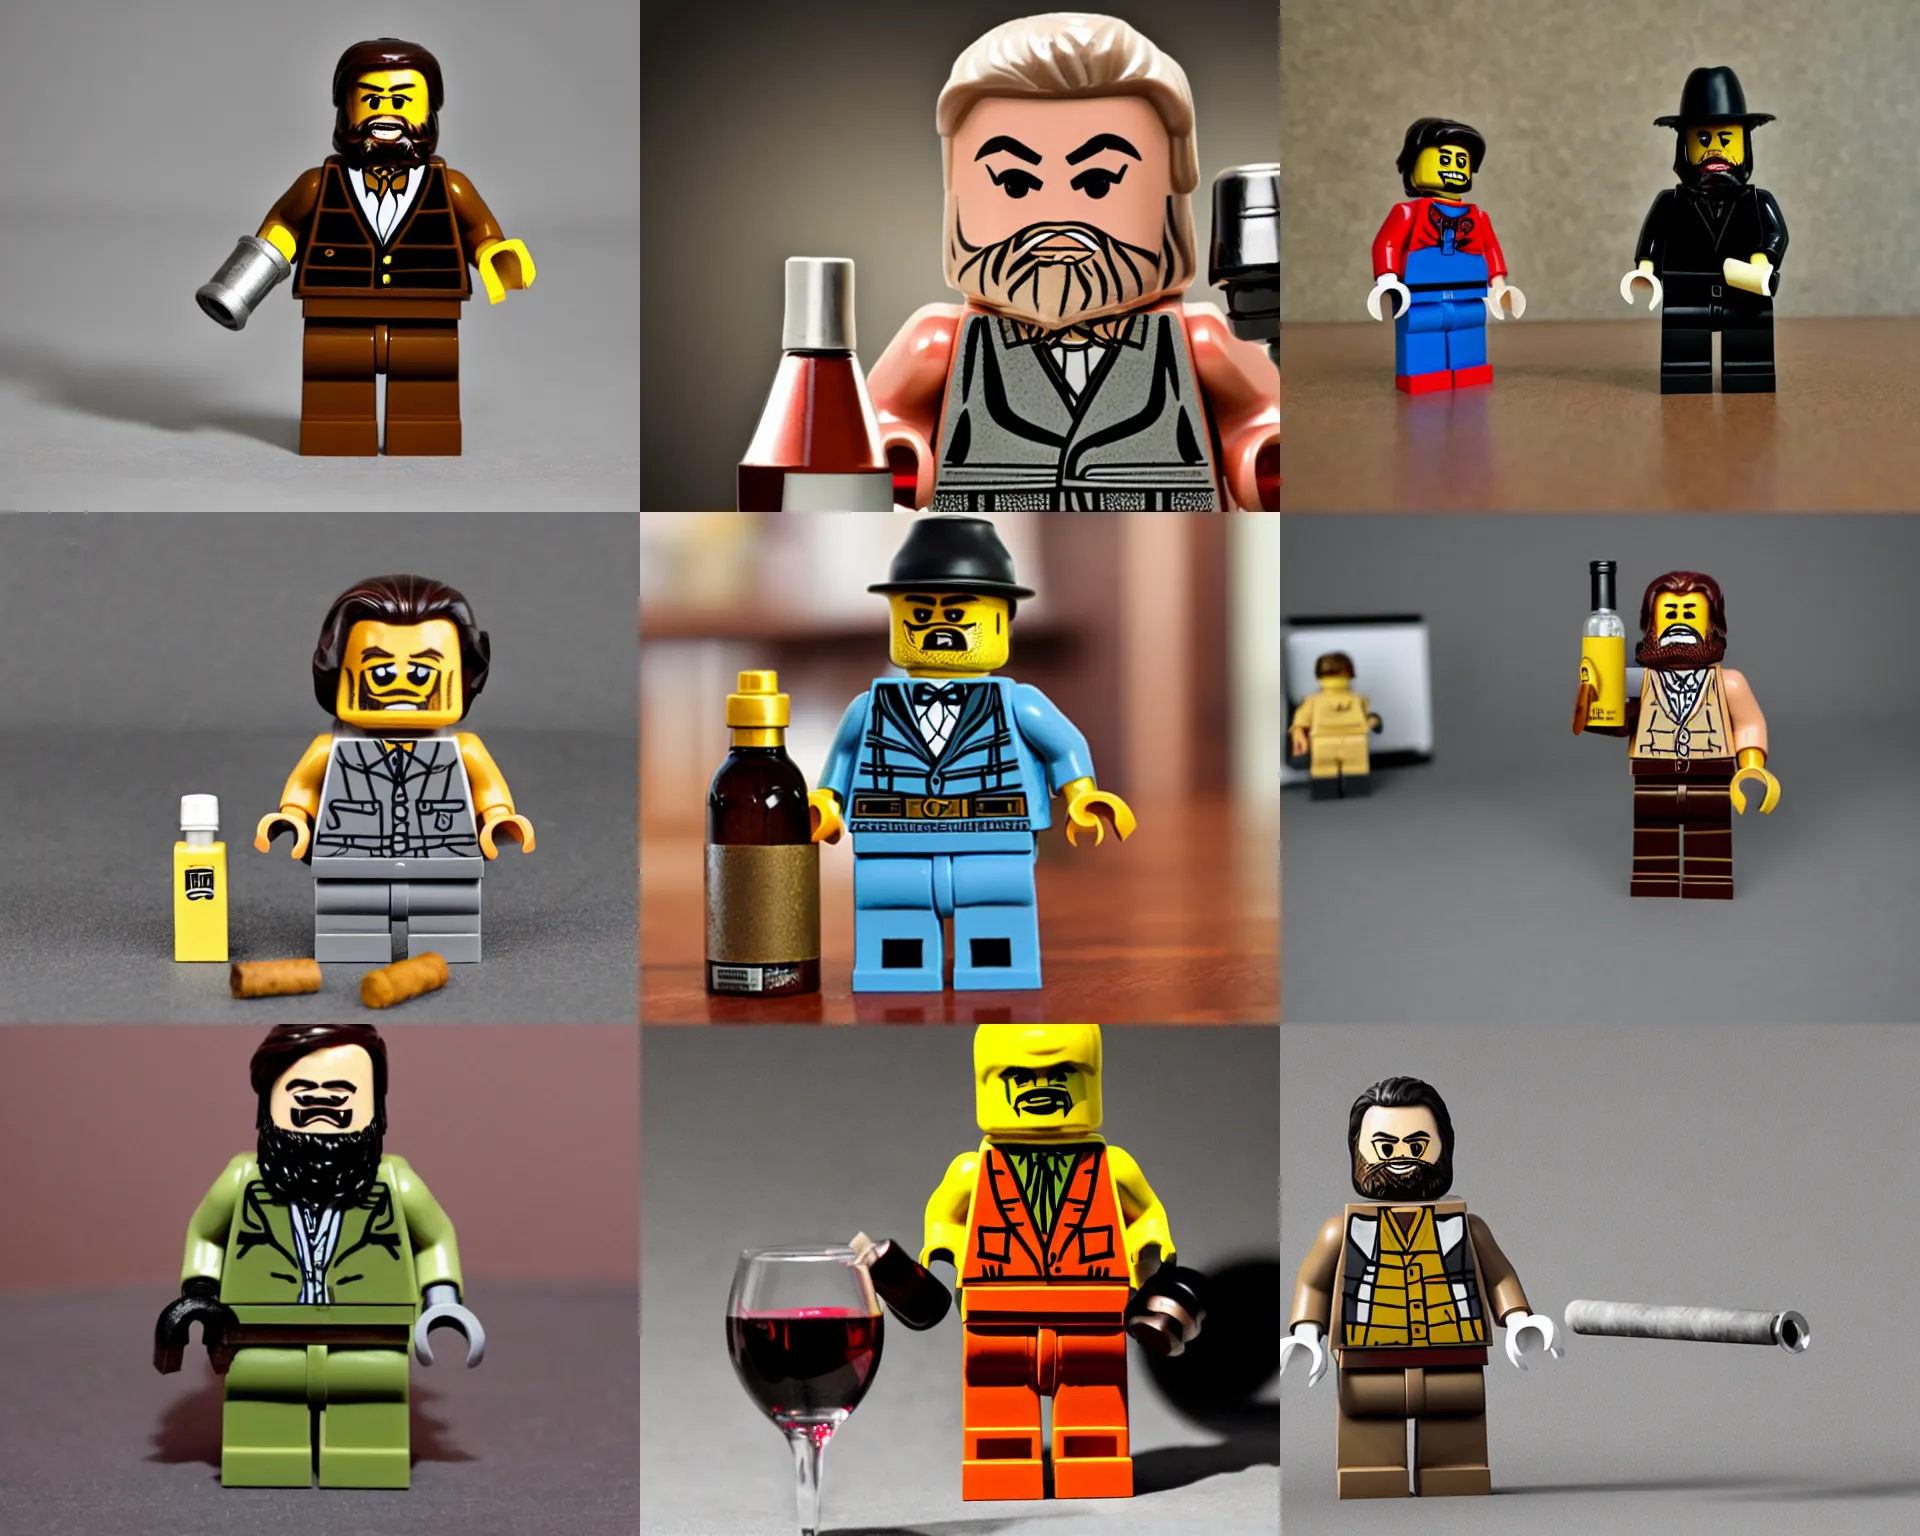 Prompt: orson welles as lego mini figure, beard, wine bottle, cigar